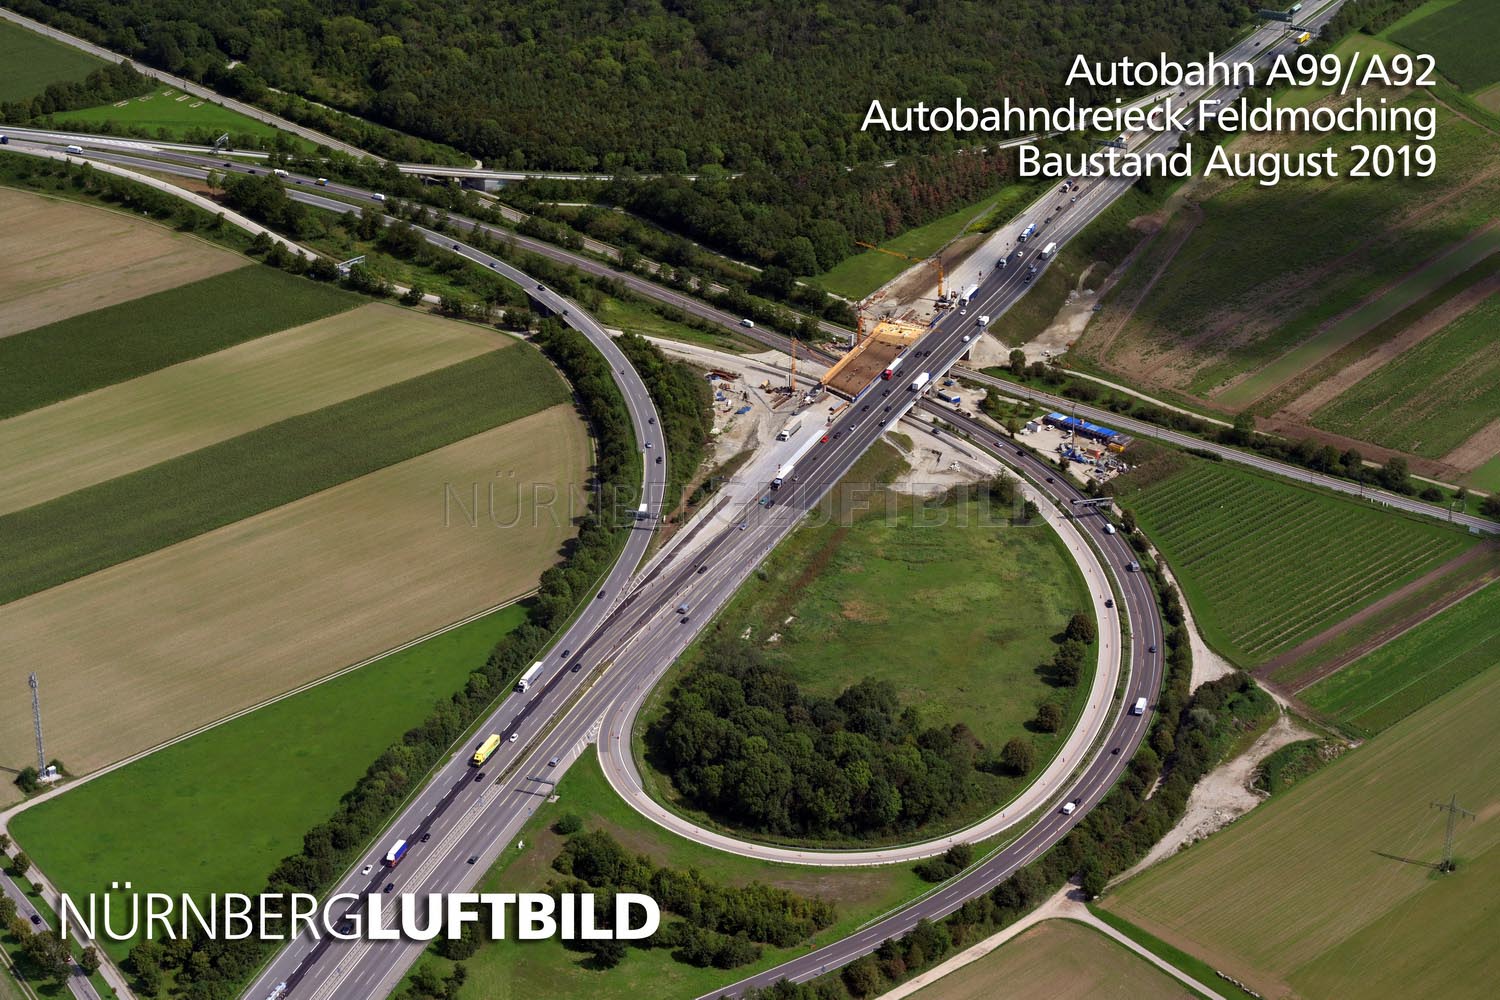 Autobahn A99/A92, Autobahndreieck Feldmoching, Baustand August 2019